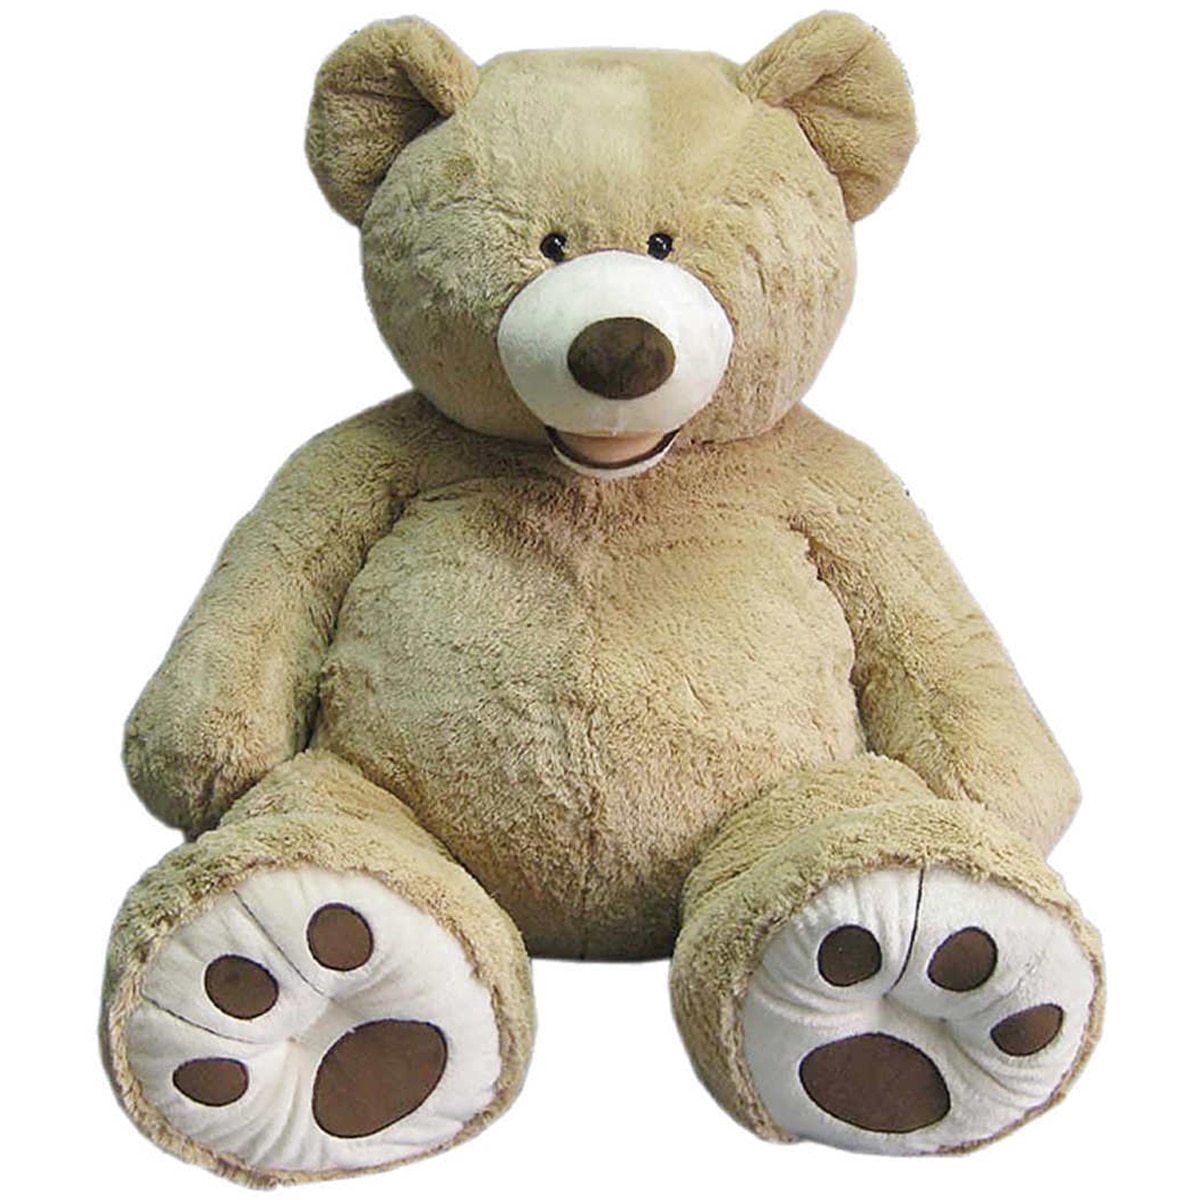 teddy bear from costco